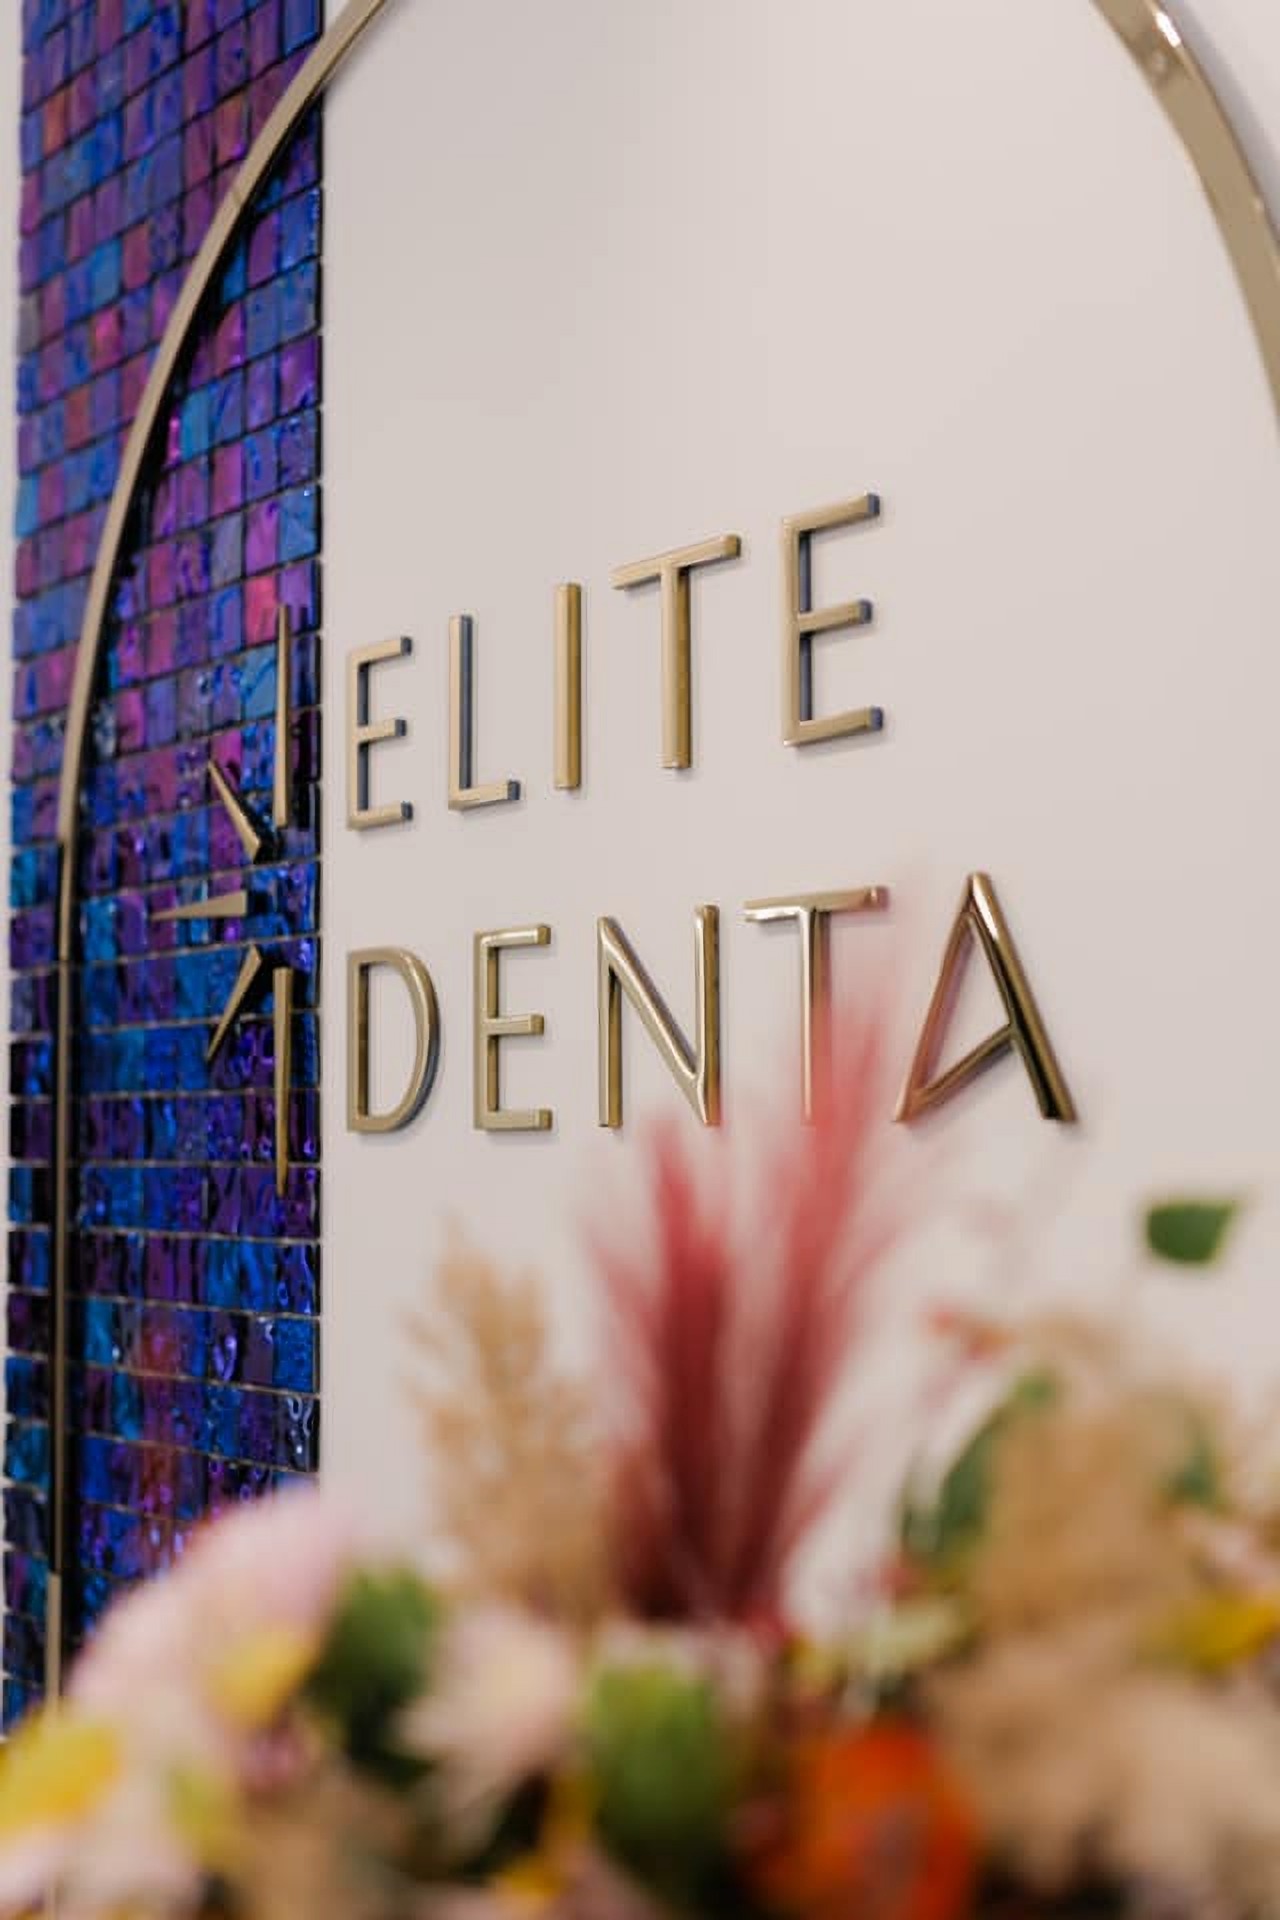 Elite Denta Clinic Hall Kharkov Ukraina